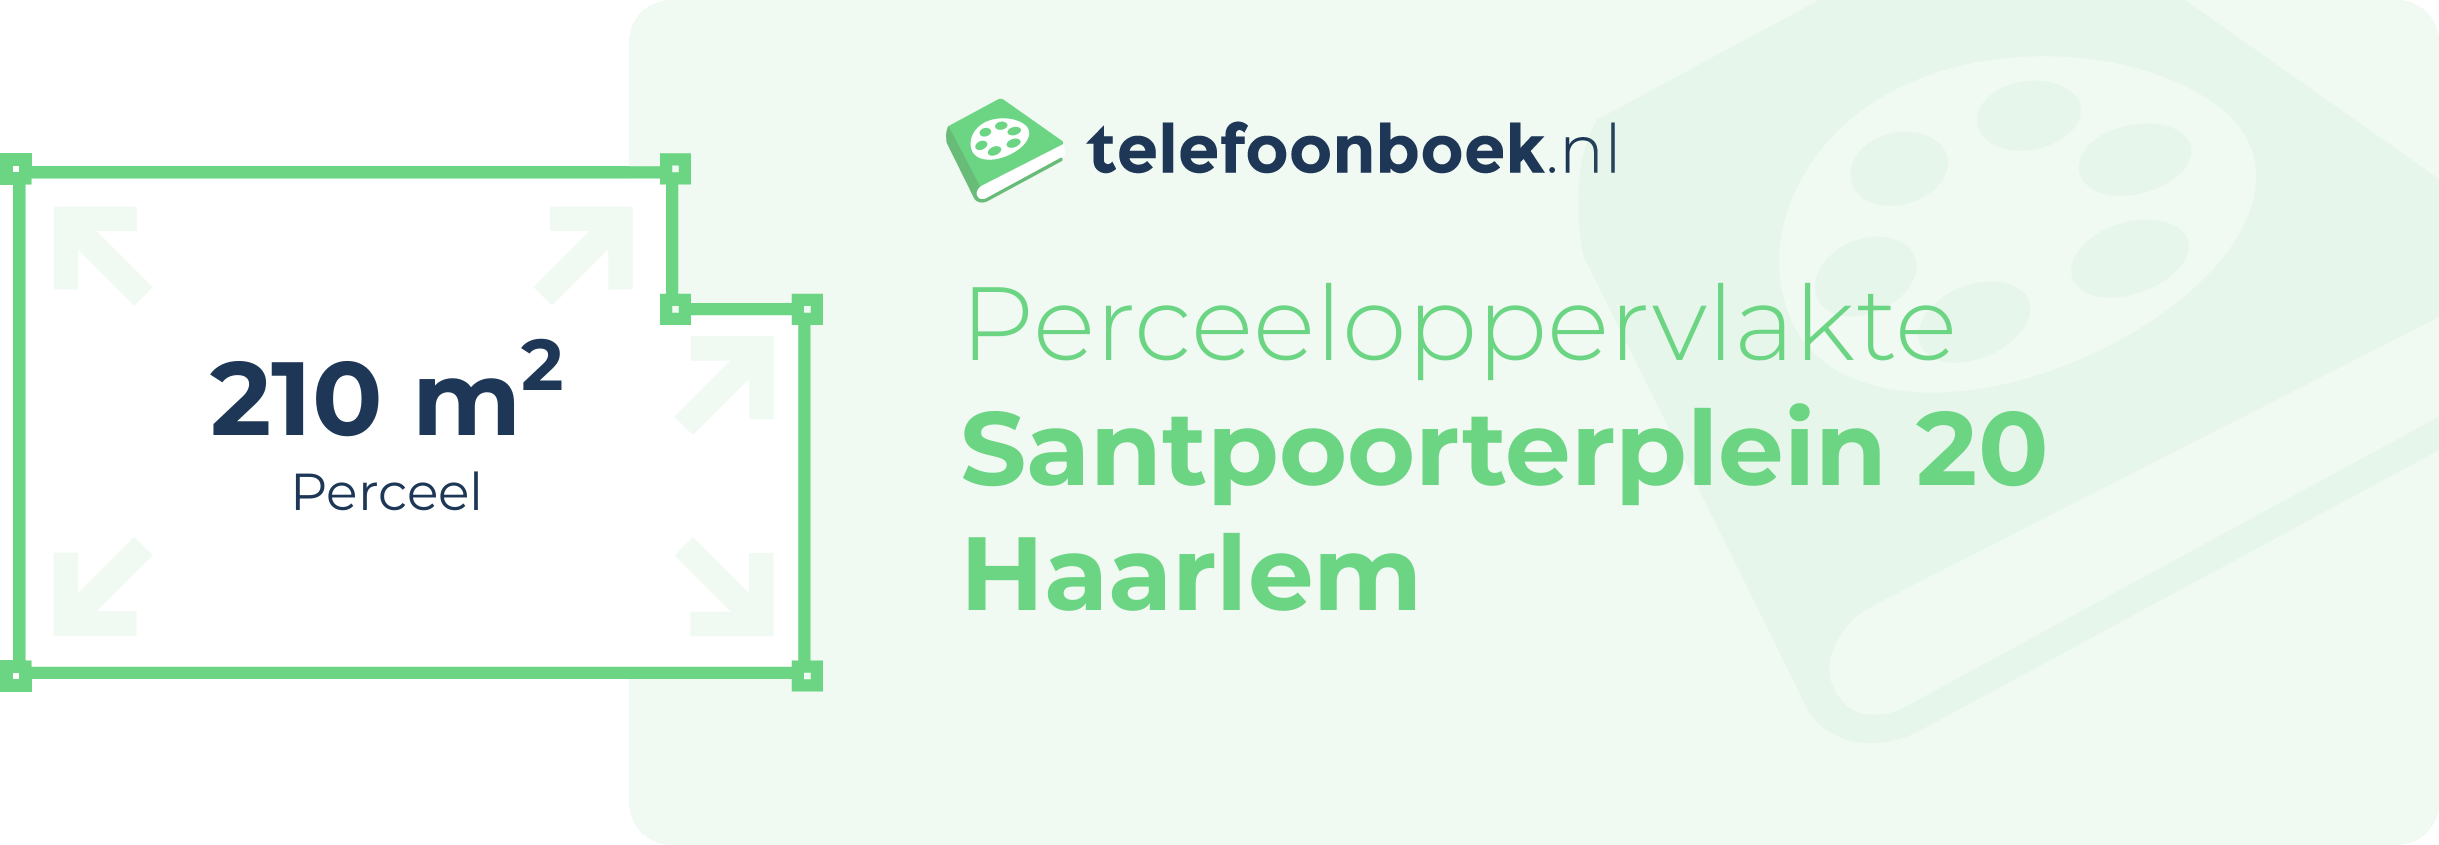 Perceeloppervlakte Santpoorterplein 20 Haarlem